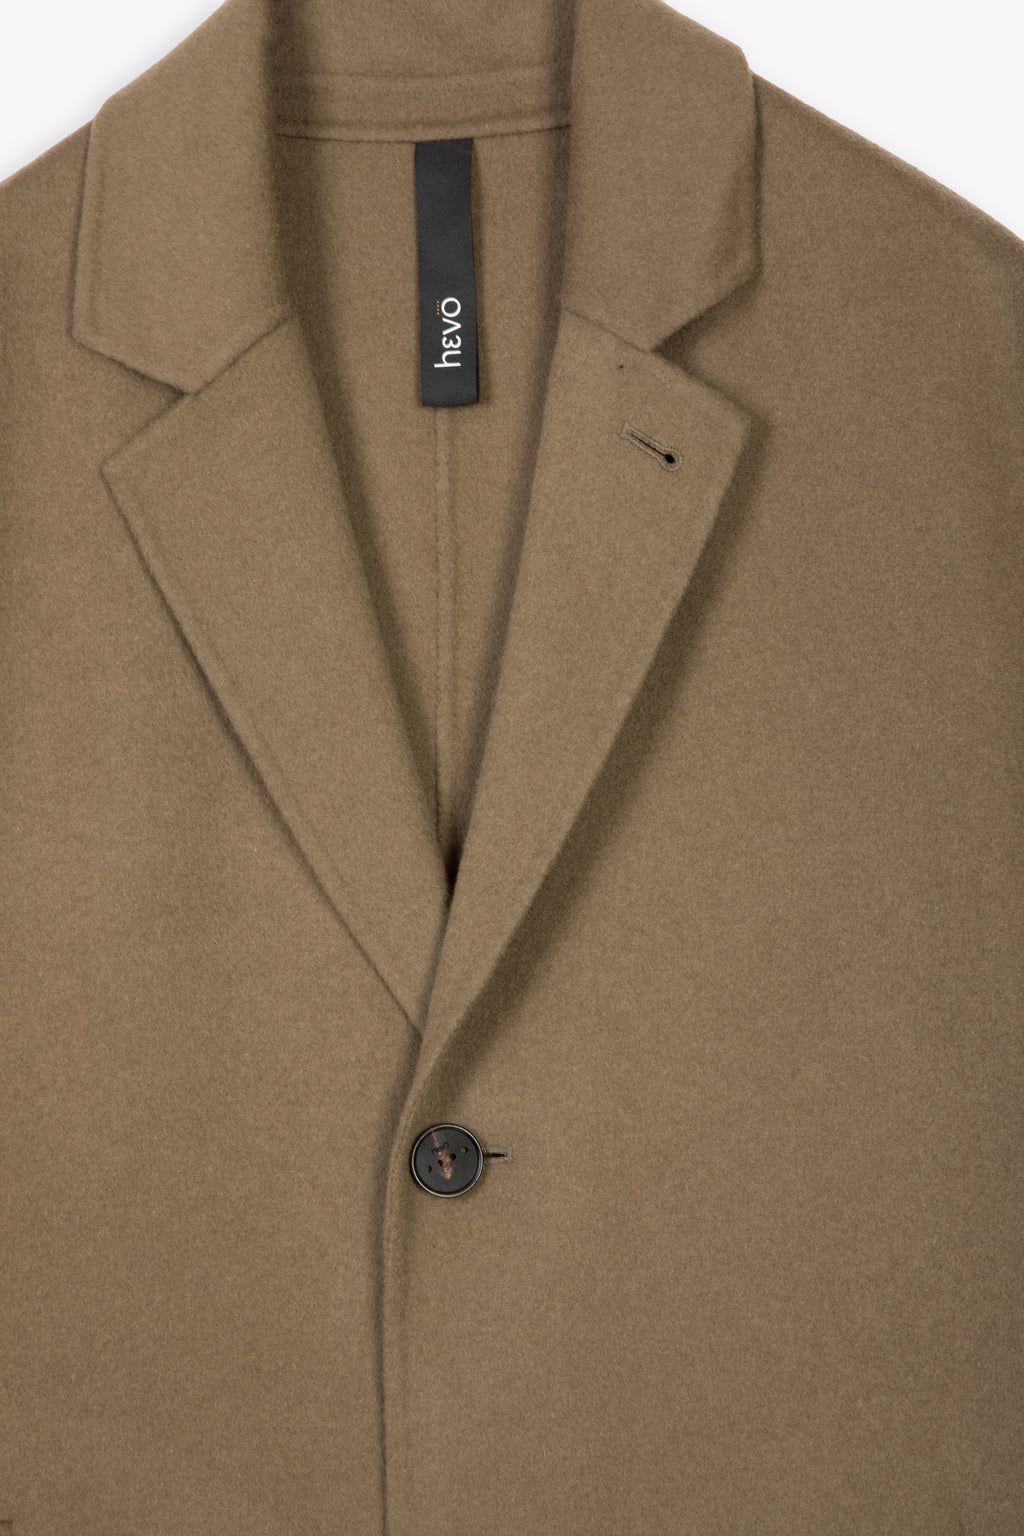 alt-image__Mud-green-wool-unlined-coat---Coat